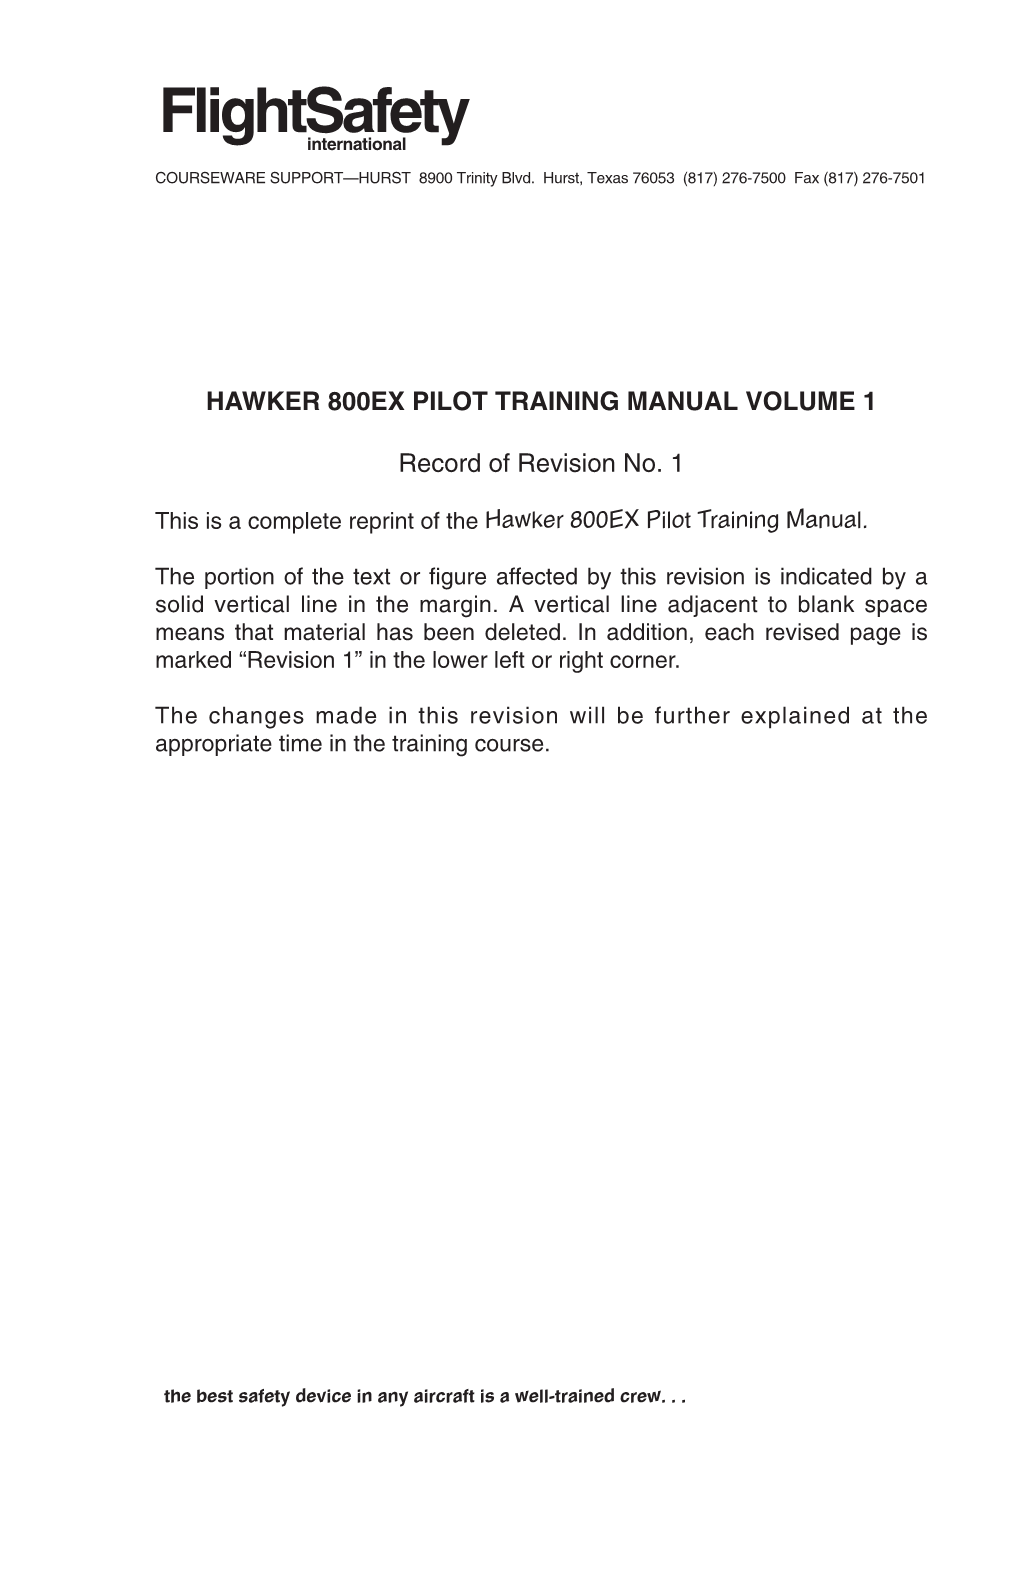 Hawker 800EX PTM Volume 1 Revision 1